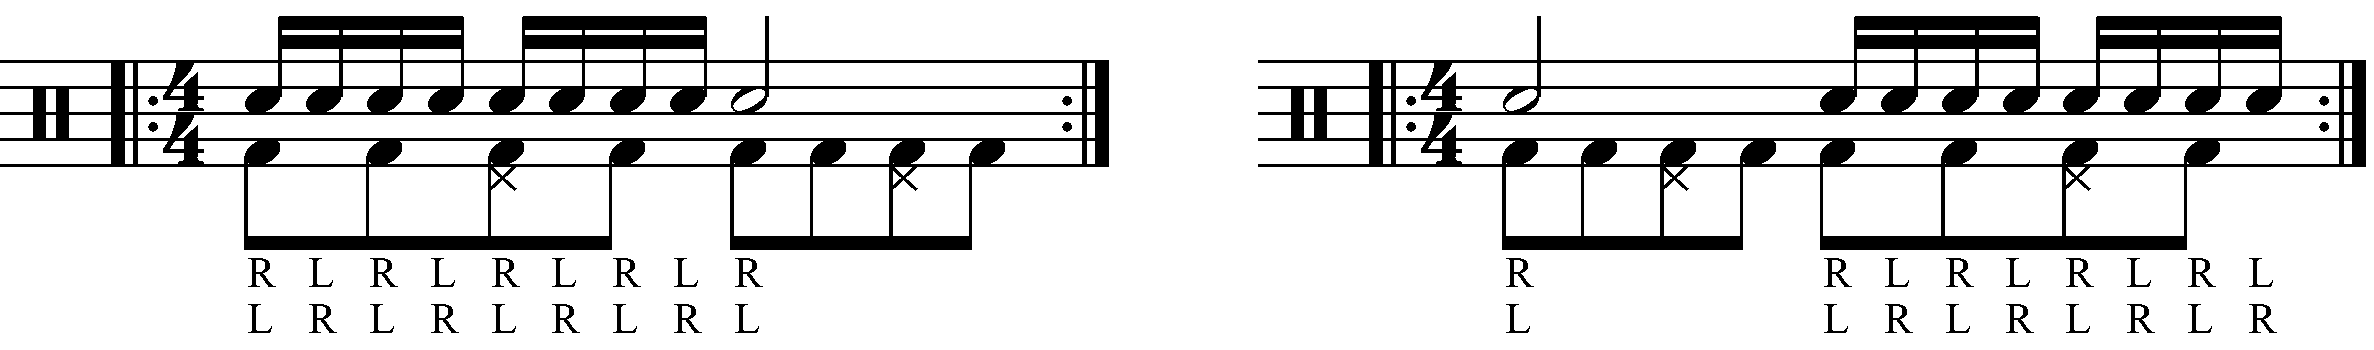 Adding eighth note feet under a single stroke 9